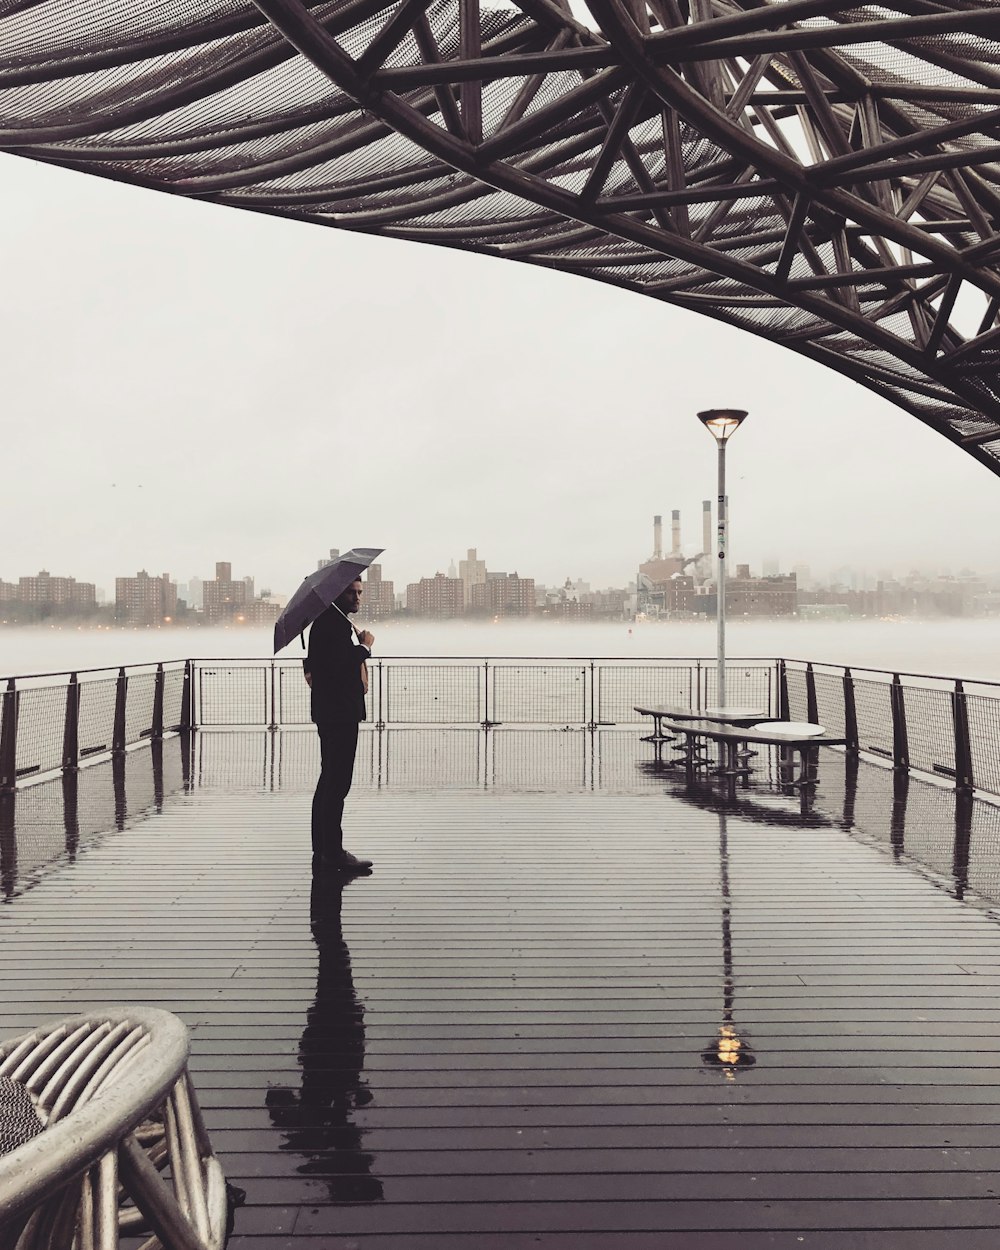 man standing on the ocean dock holding umbrella